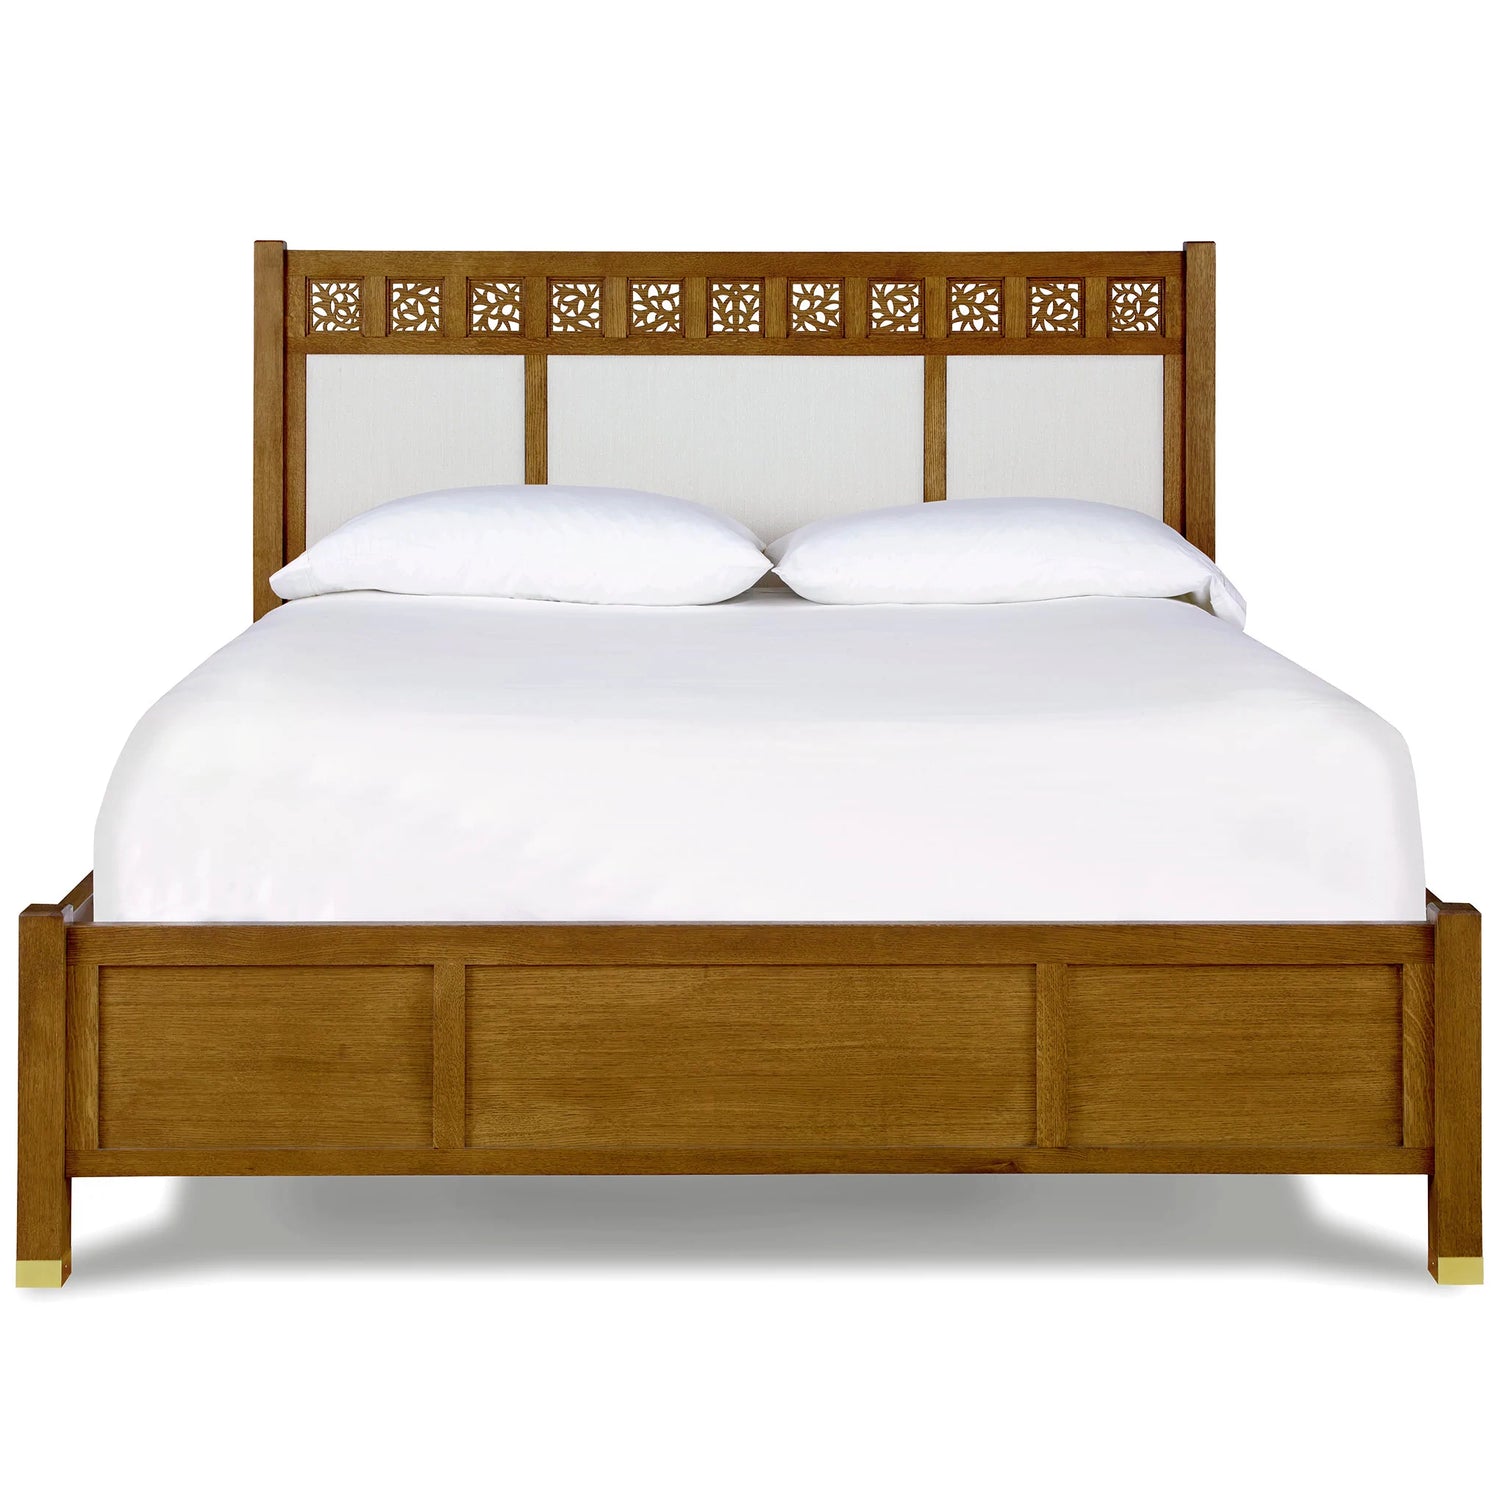 Surrey Hills Upholstered Panel Bed, Cal King